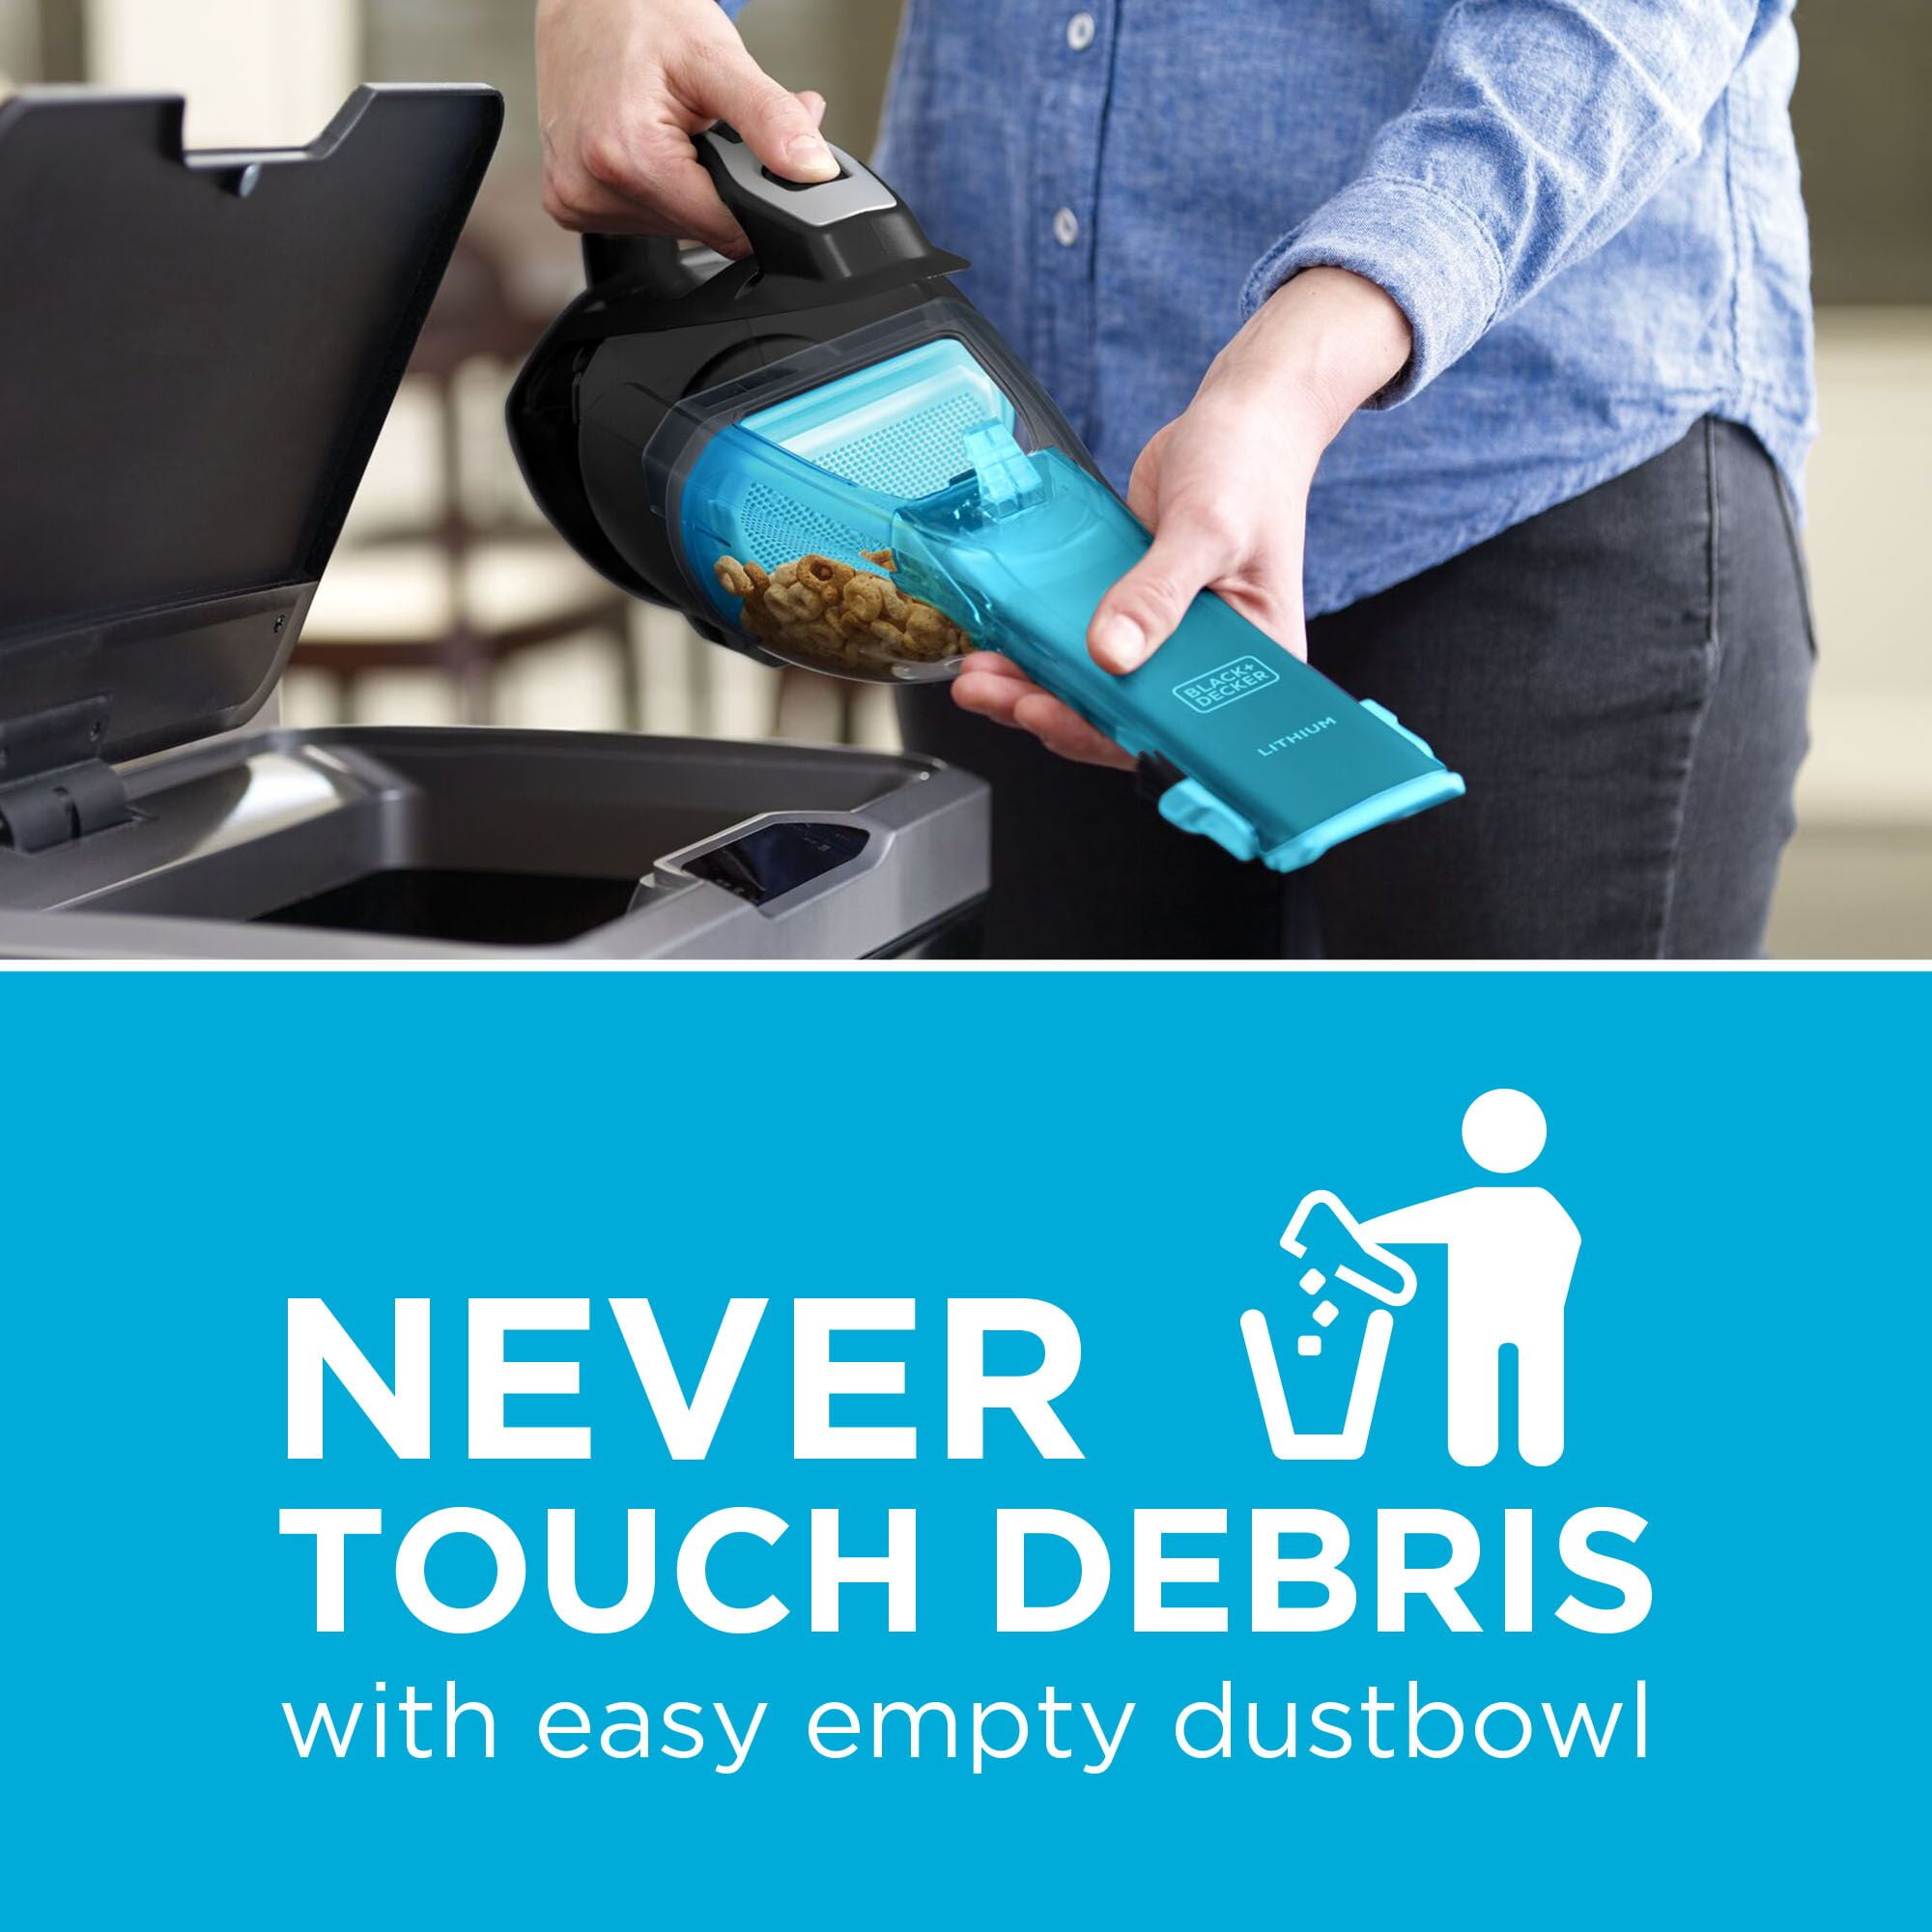 Dustbuster Detailer Cordless Hand Vacuum